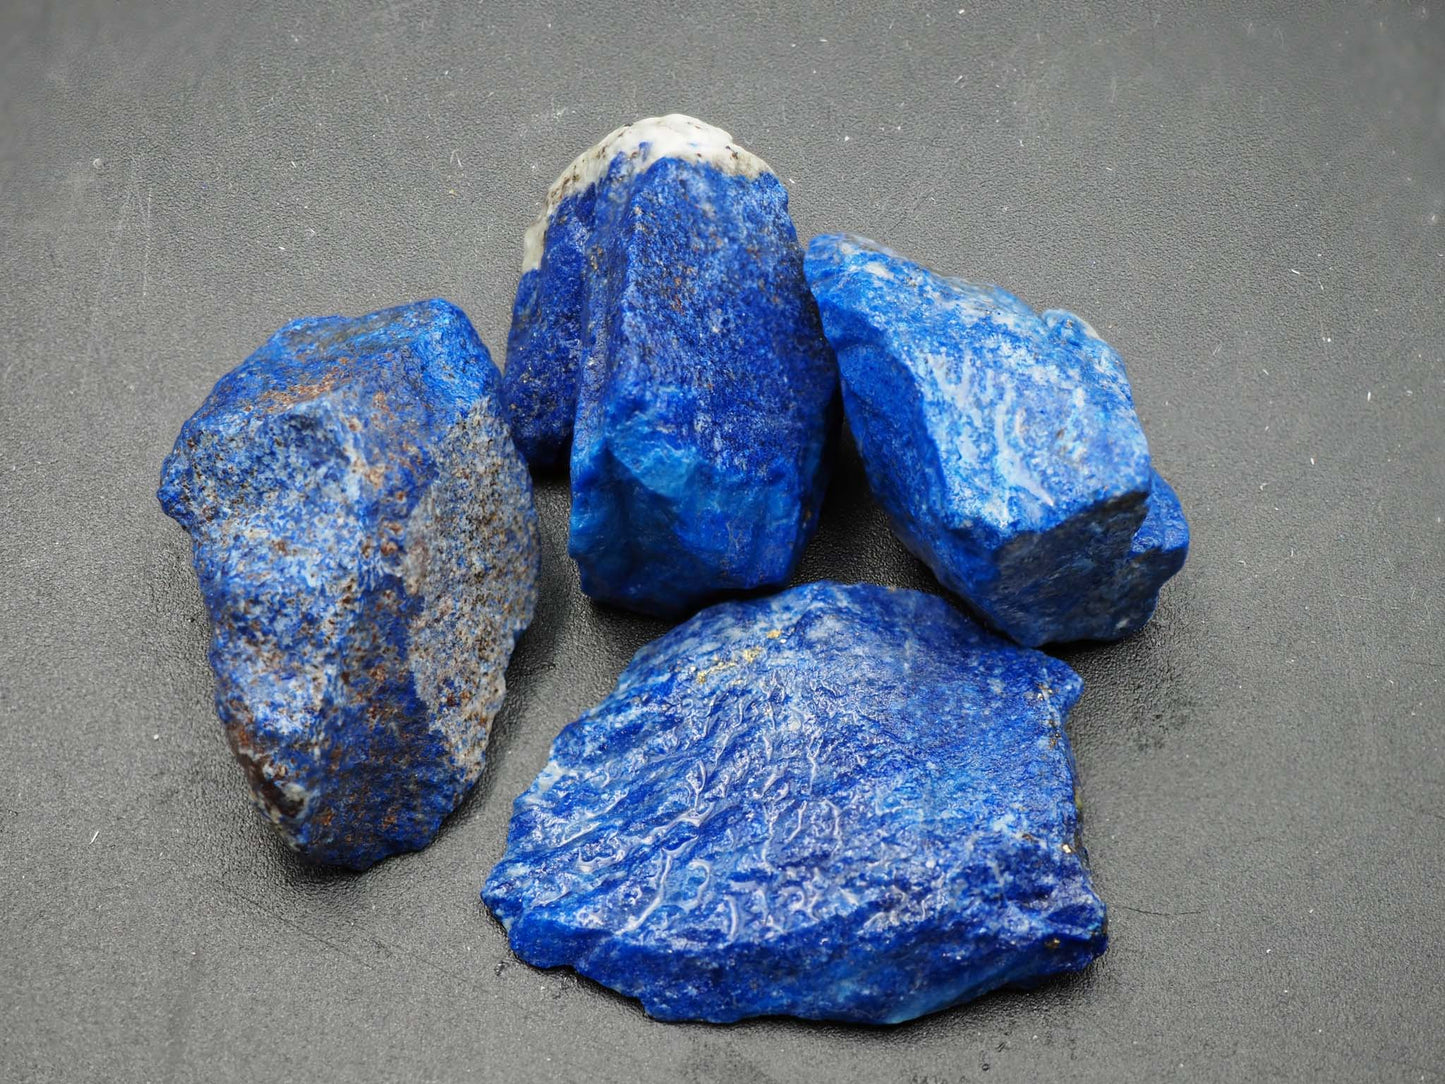 Rough Lapis Lazuli - Badakshan Province, Afghanistan (~100g parcel)